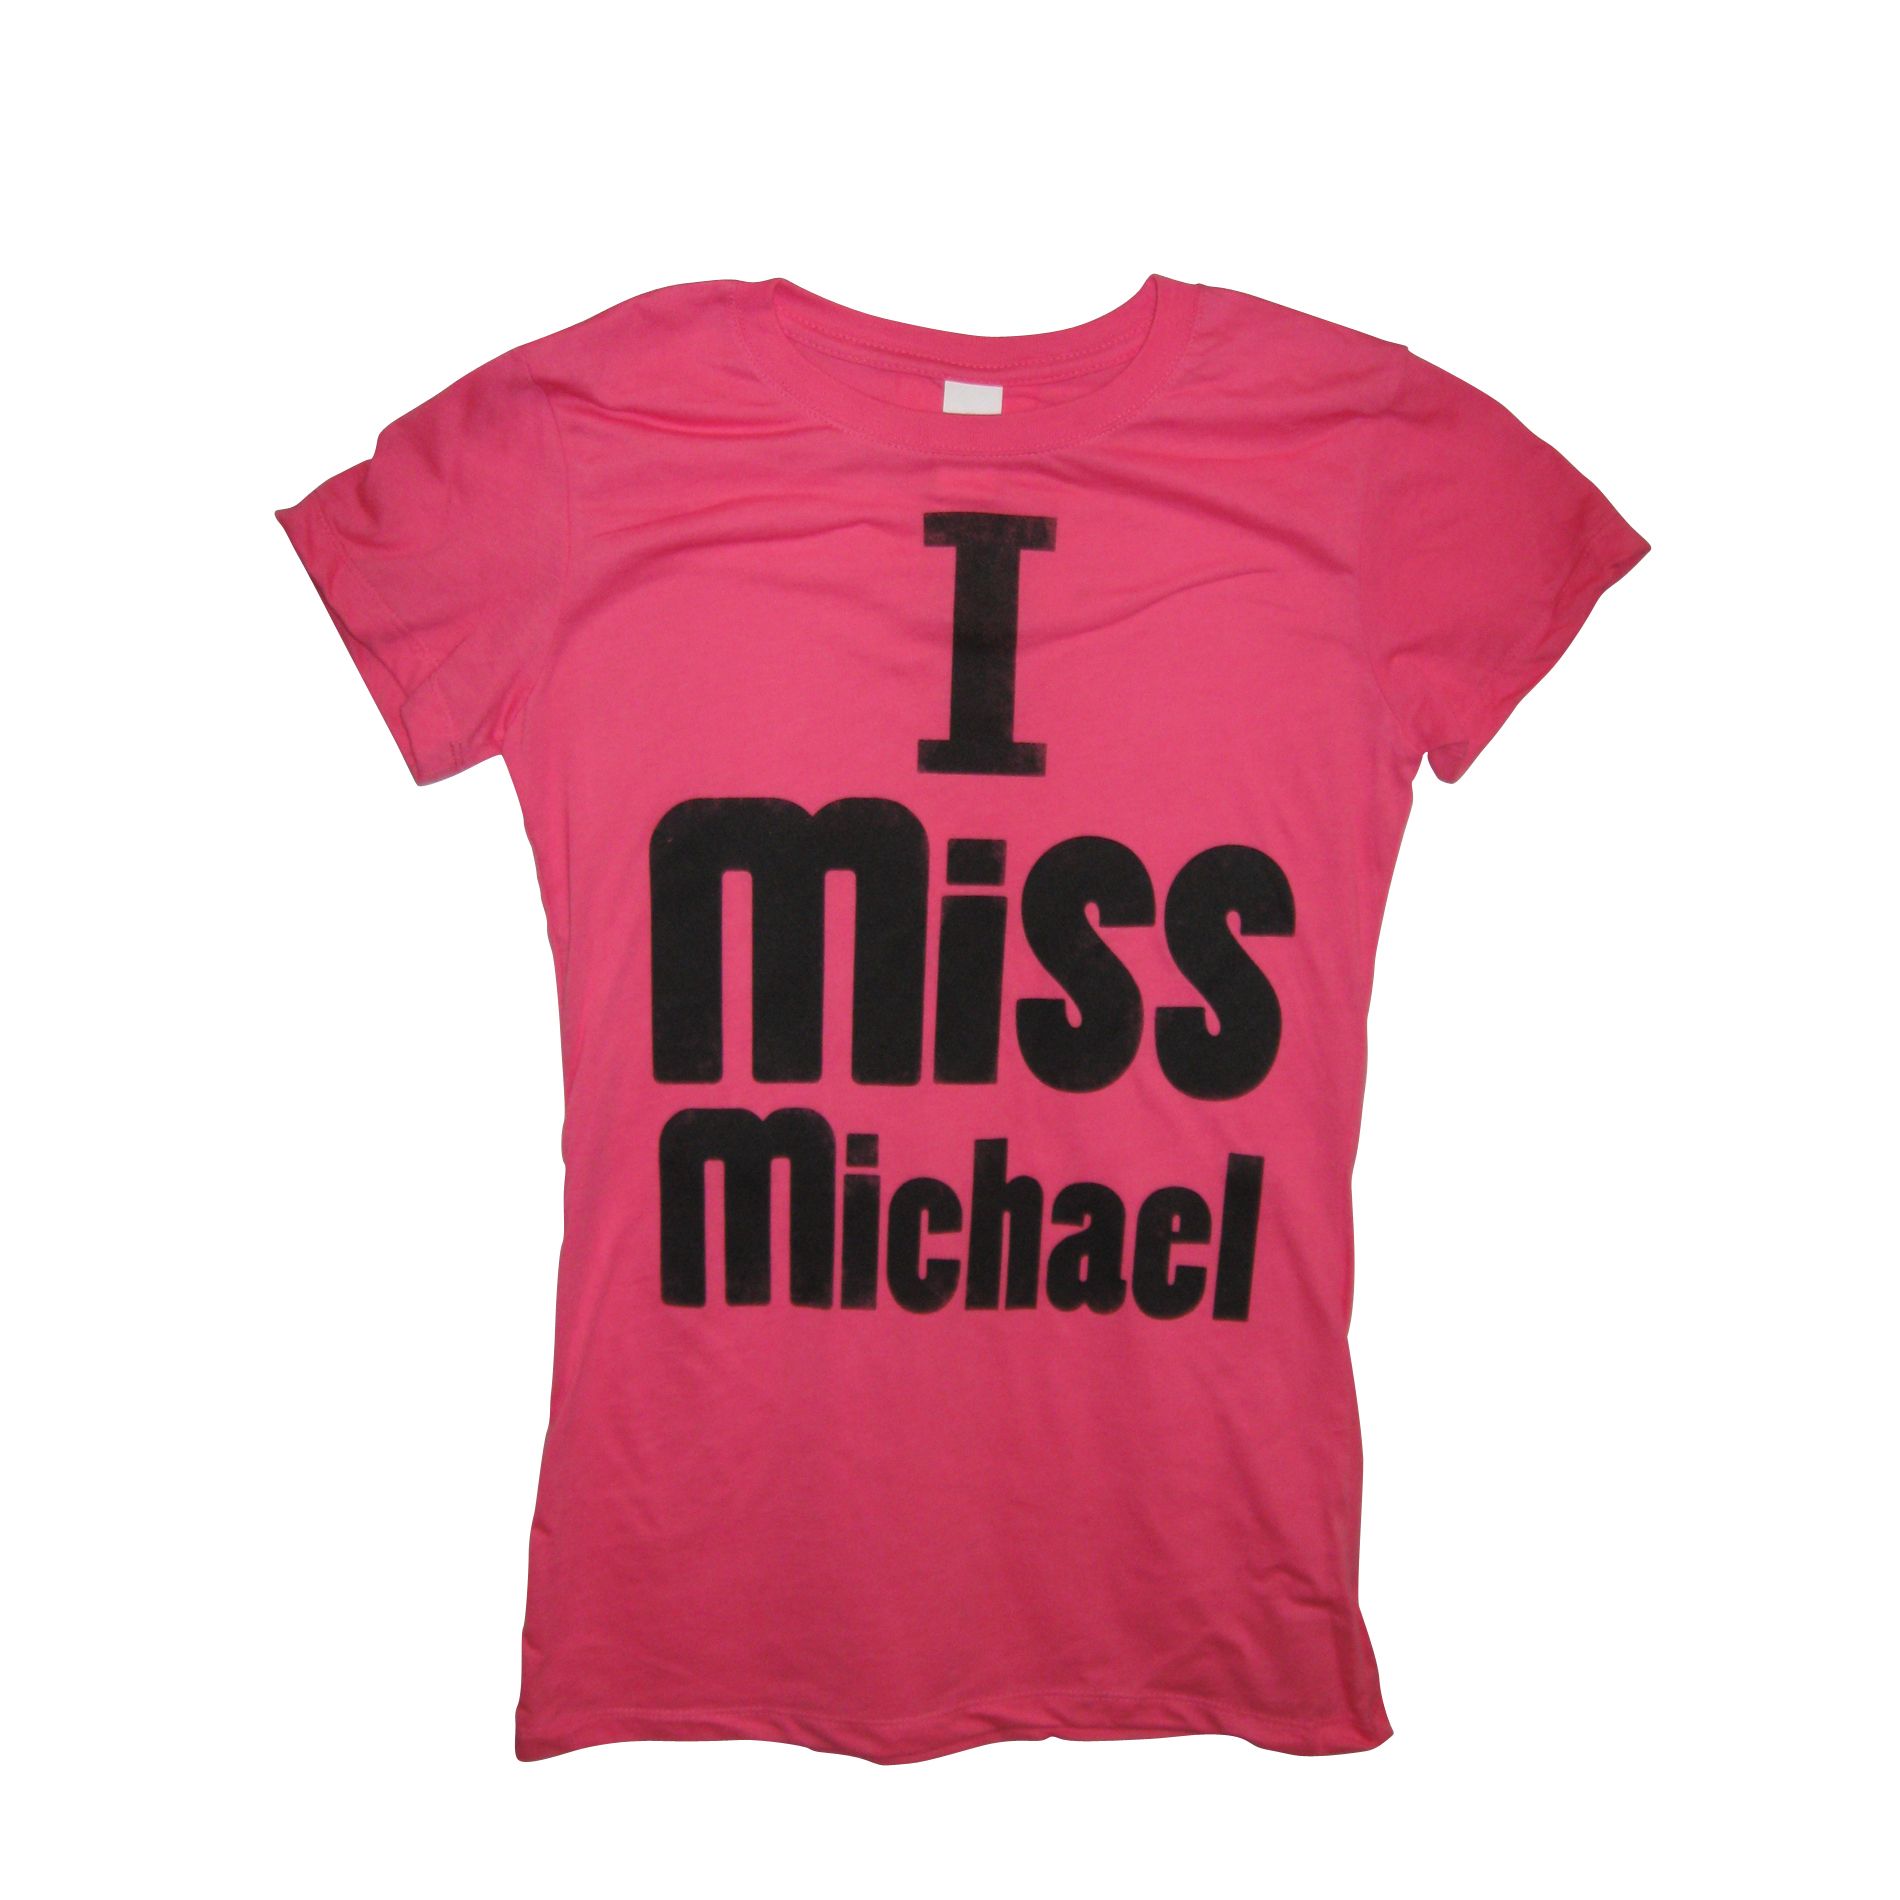 Junior's "I Miss Michael" Tee